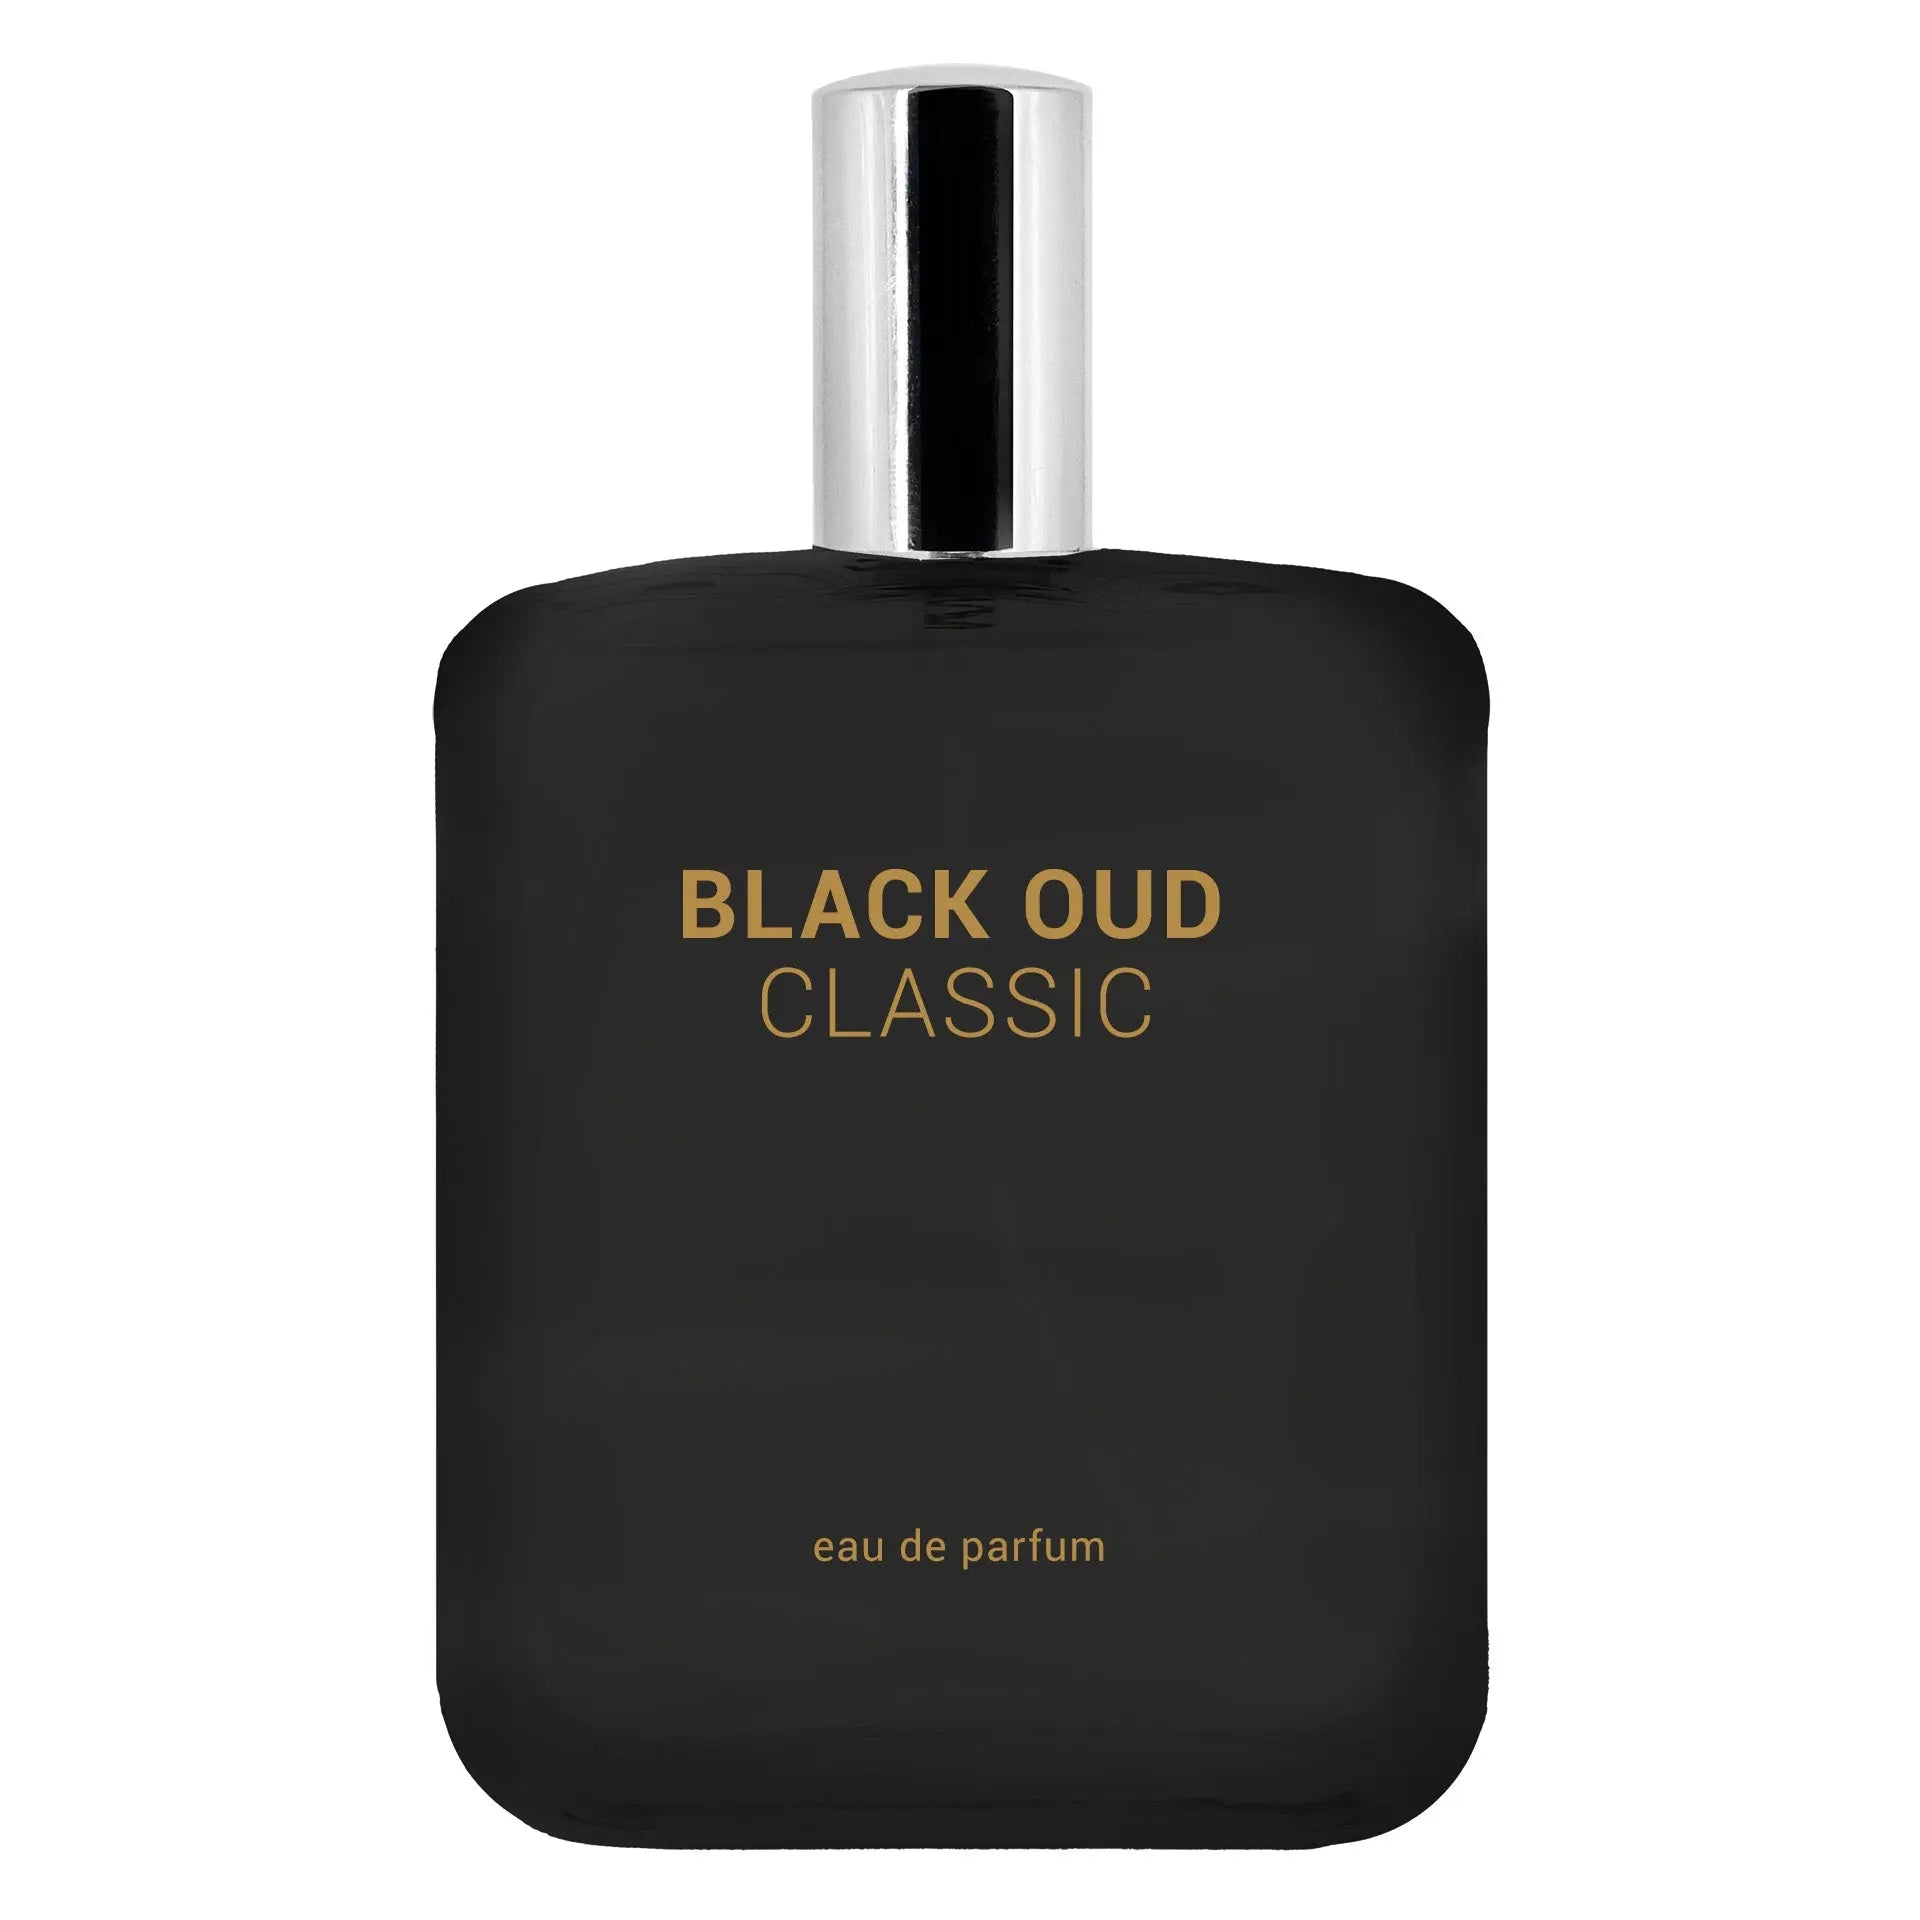 Black Oud Classic - 60ml Eau De Parfum - Dapper Industries SA